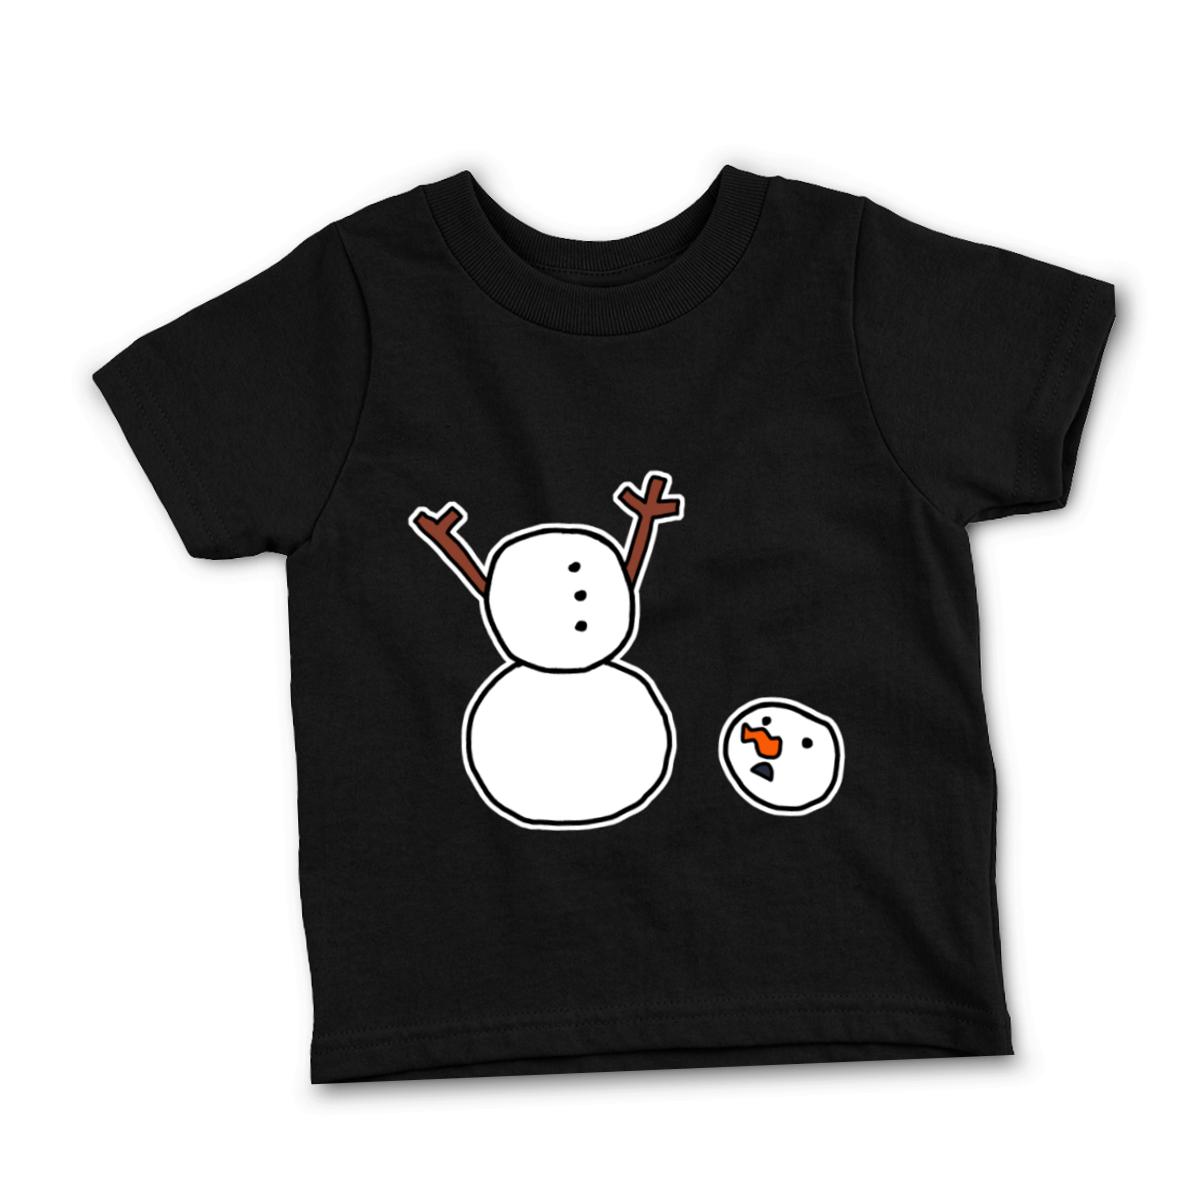 Headless Snowman Toddler Tee 2T black